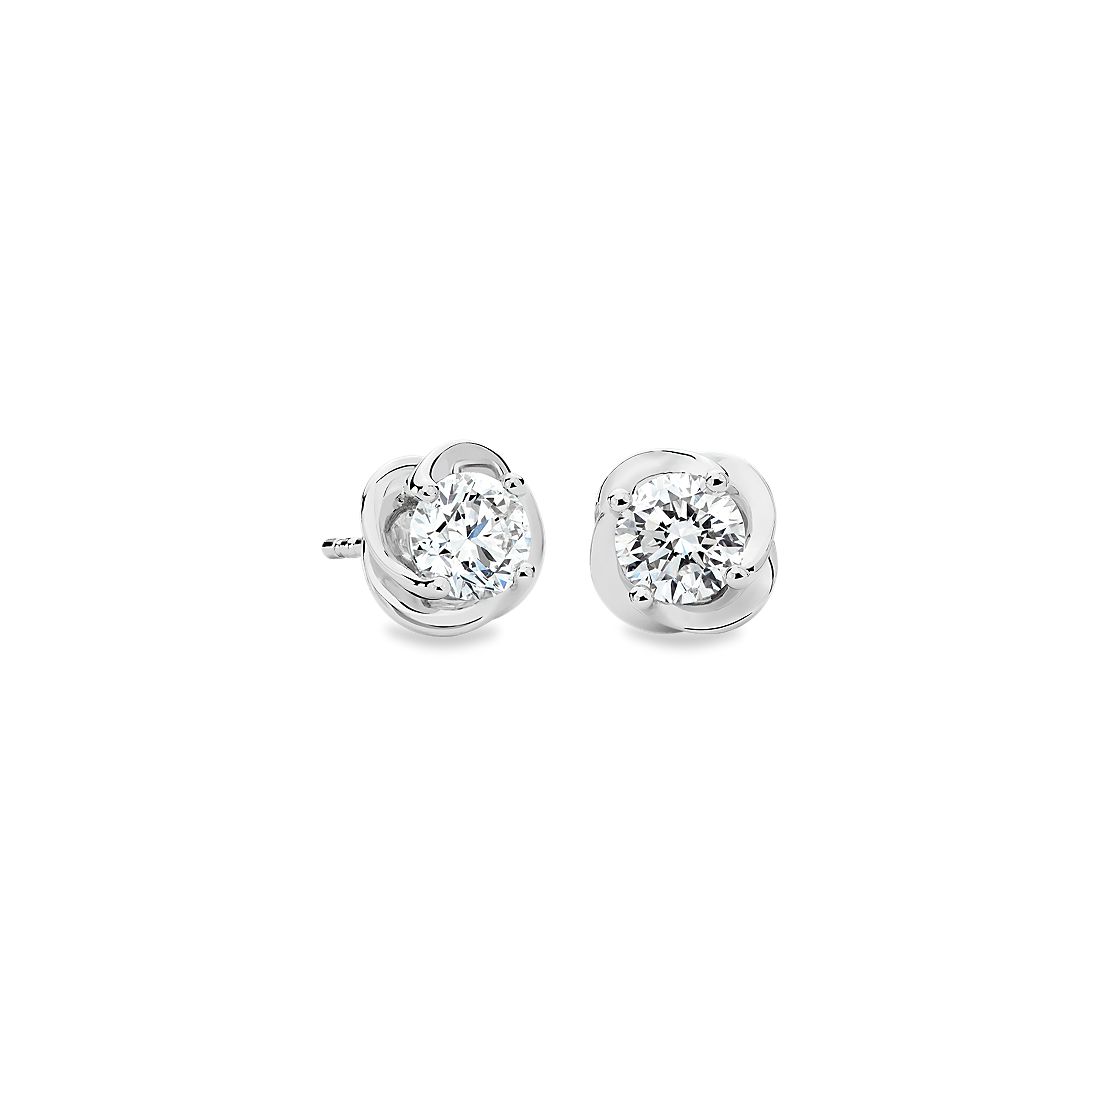 Rose Petal Diamond Stud Earrings in 14k White Gold (0.96 ct. tw.)